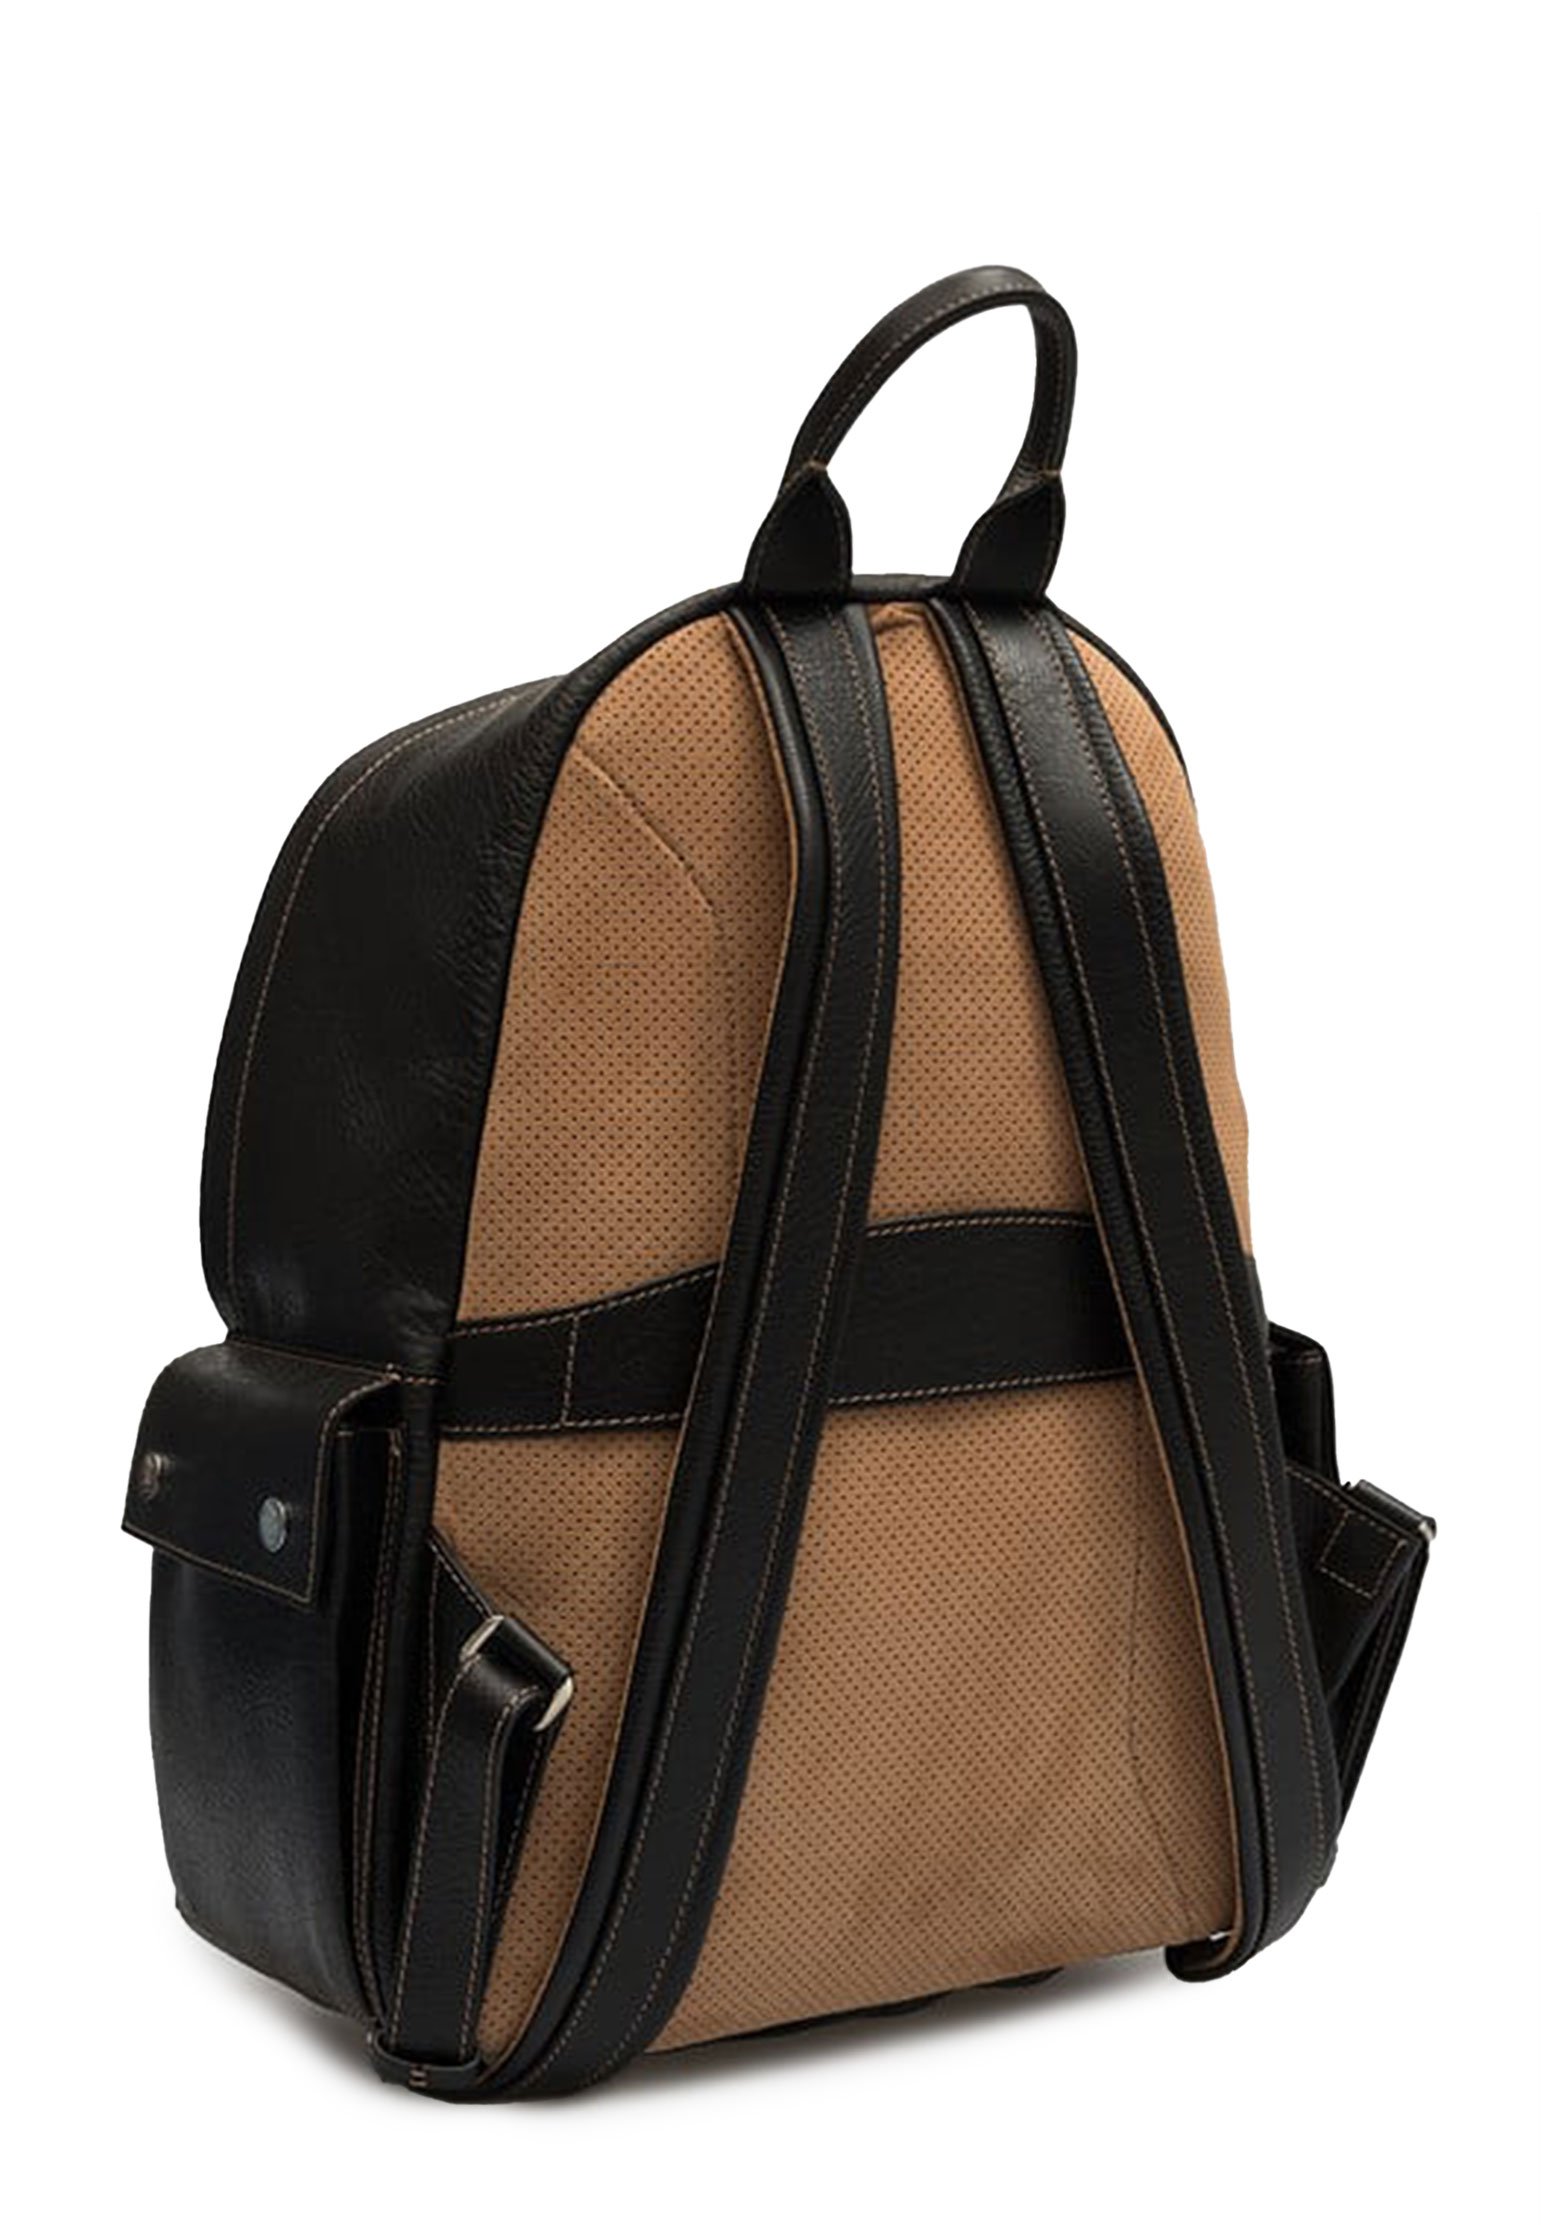 Bag BRUNELLO CUCINELLI Color: black (Code: 2496) in online store Allure